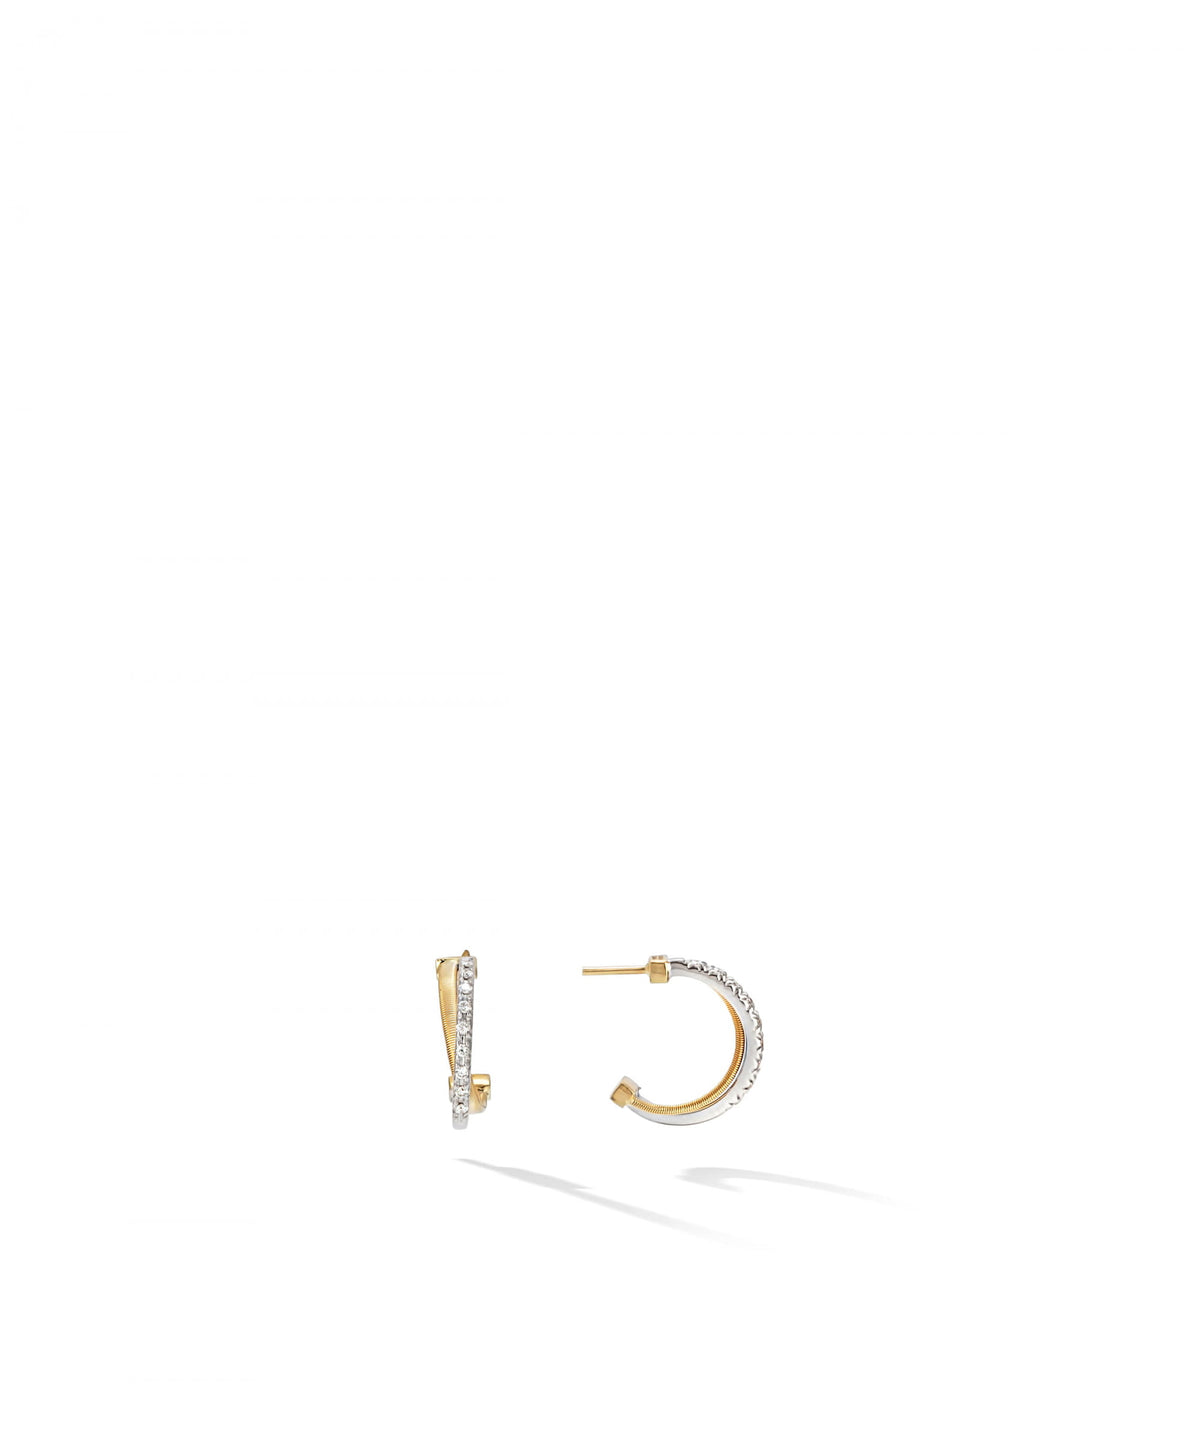 Goa Hoop Earrings in 18k Yellow Gold with Diamonds - Orsini Jewellers NZ